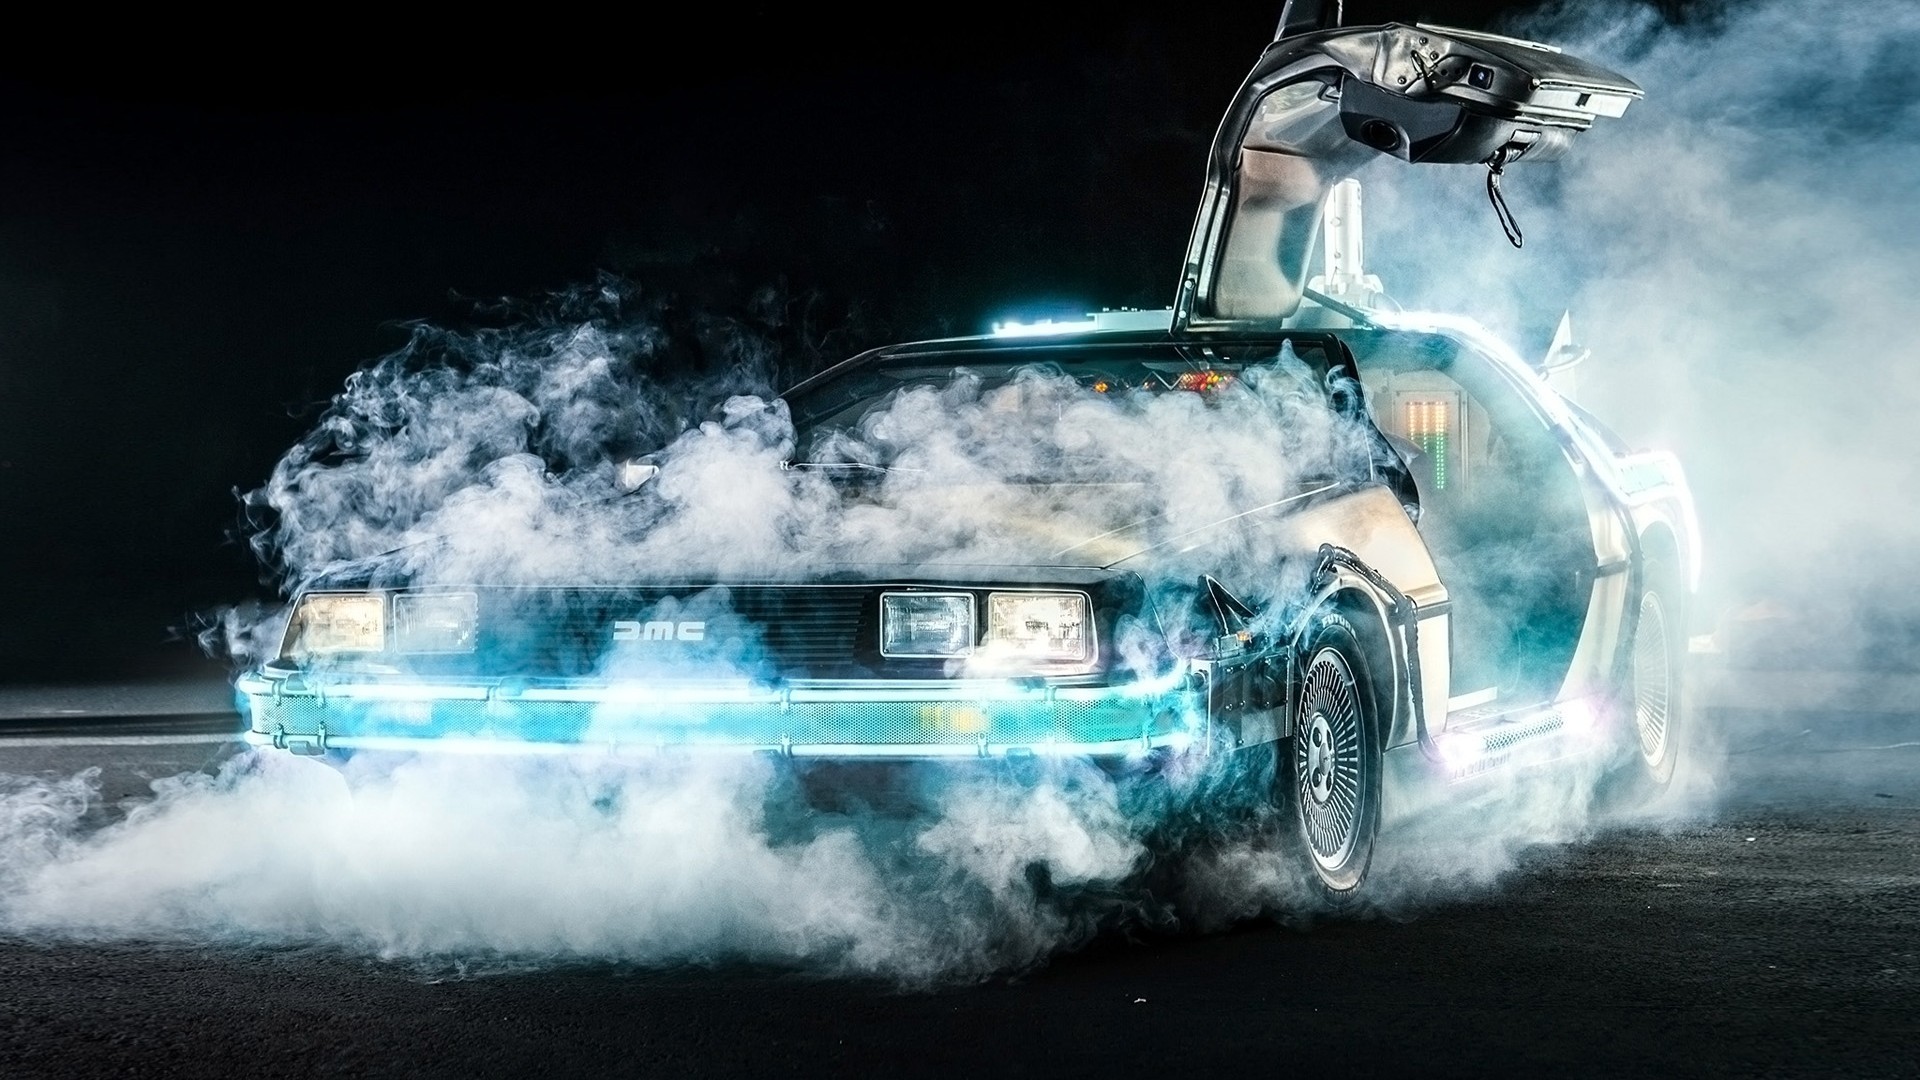 Back To The Future DeLorean Time Travel Car Movies Smoke Cyan Black Night 1920x1080